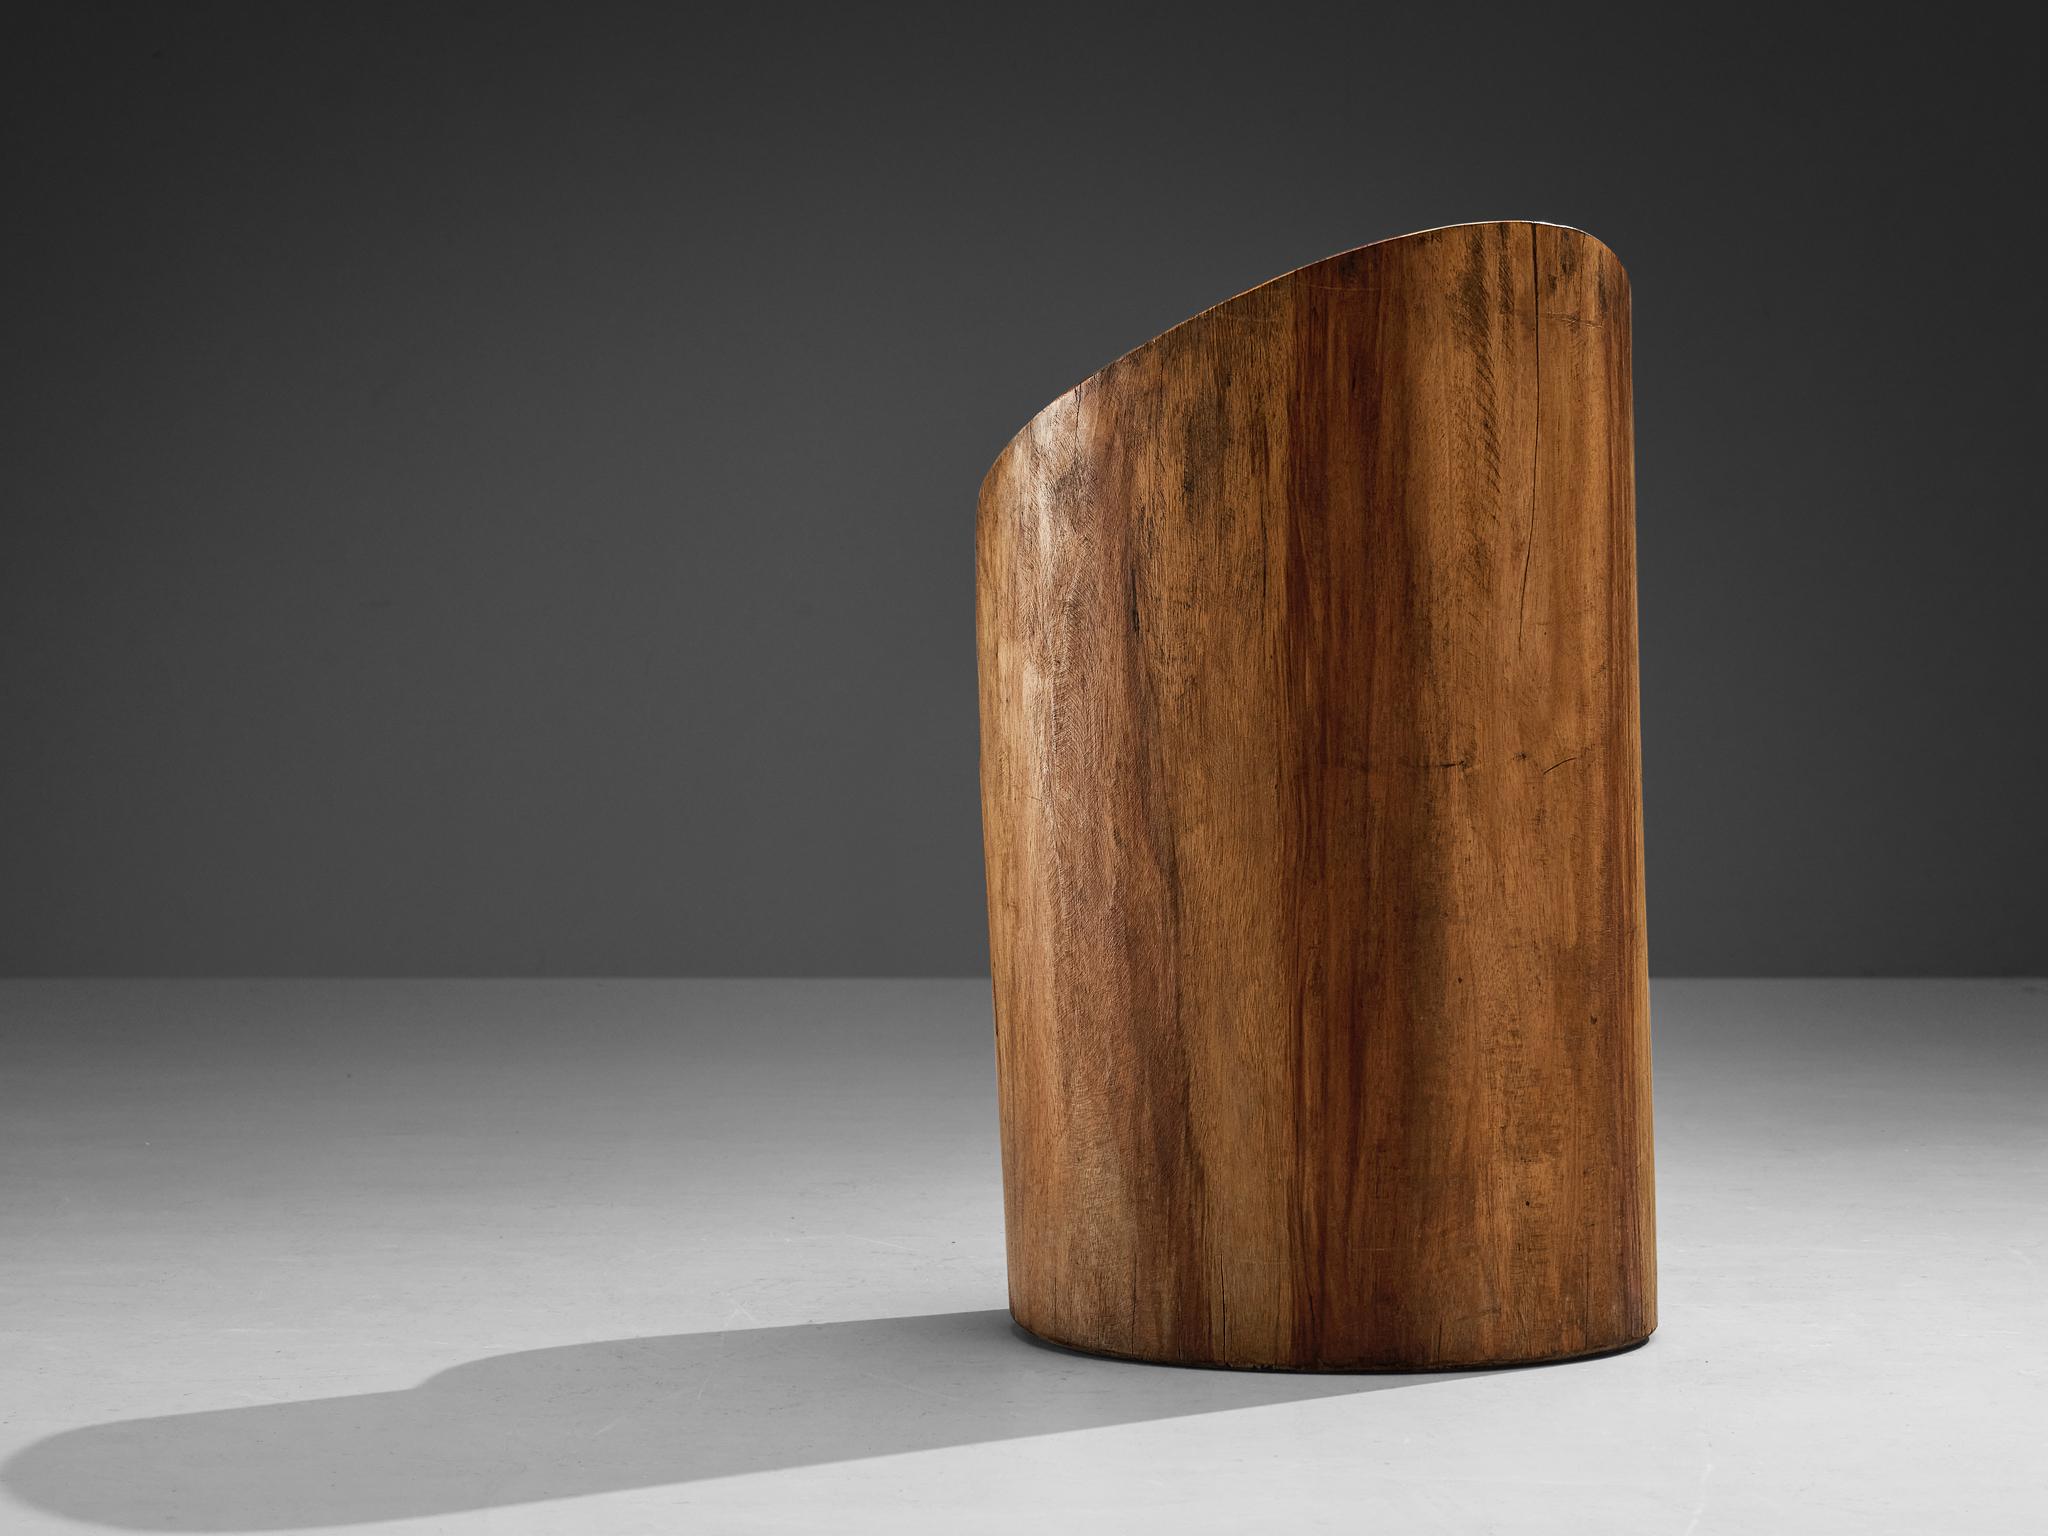 José Zanine Caldas Hand-Sculpted Chair in Brazilian Hardwood  For Sale 4